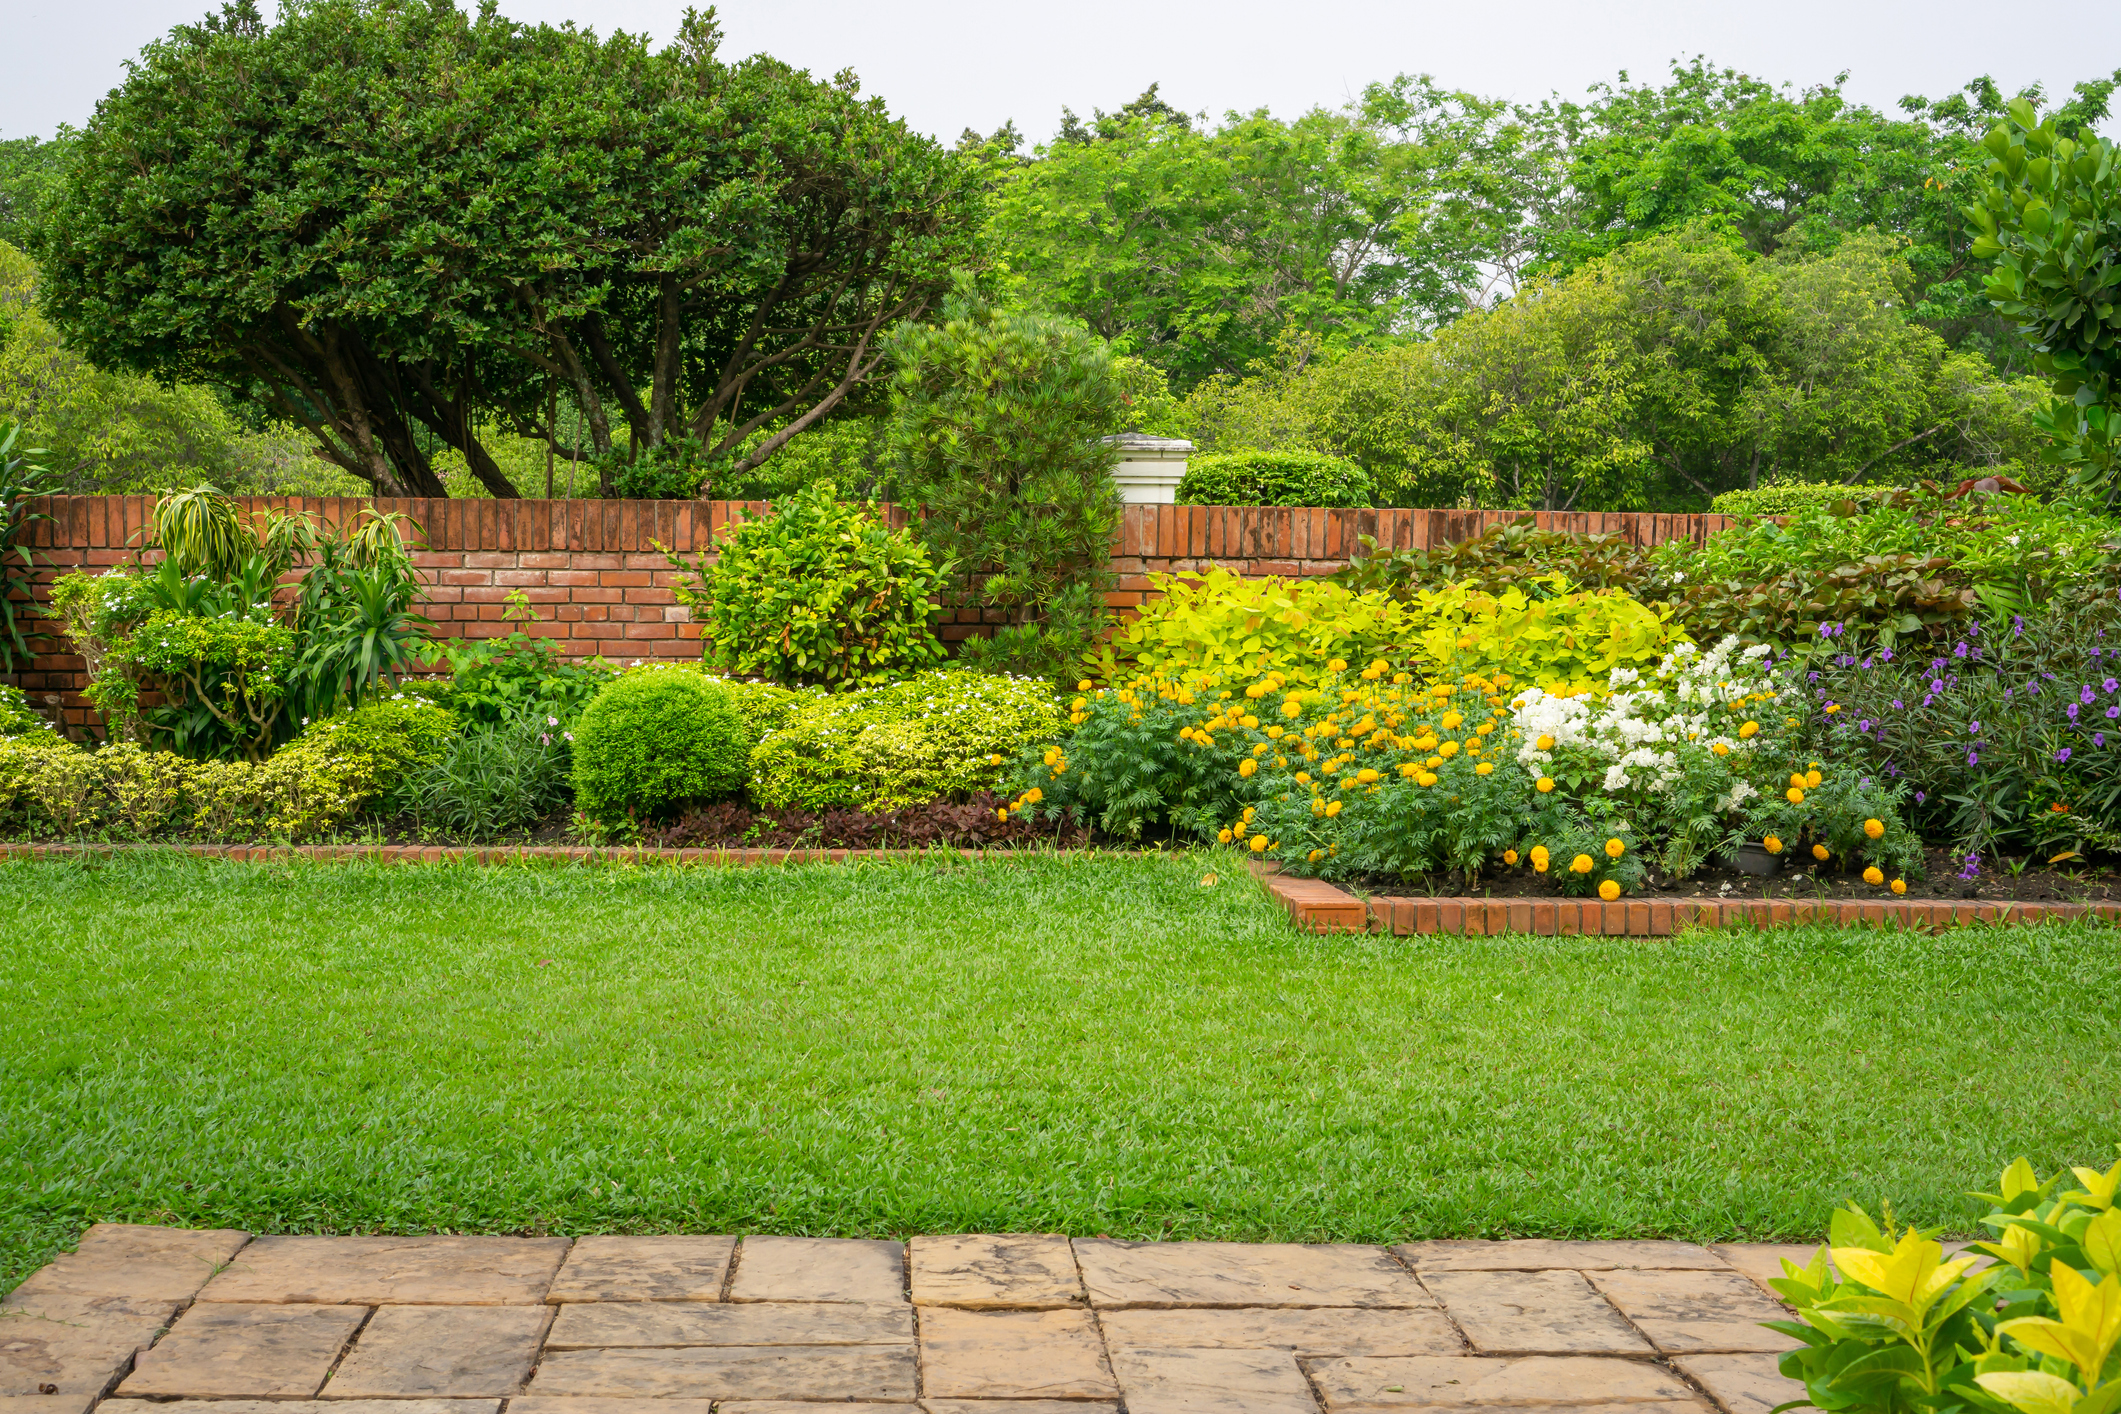 a green lawn and garden near a brick fence